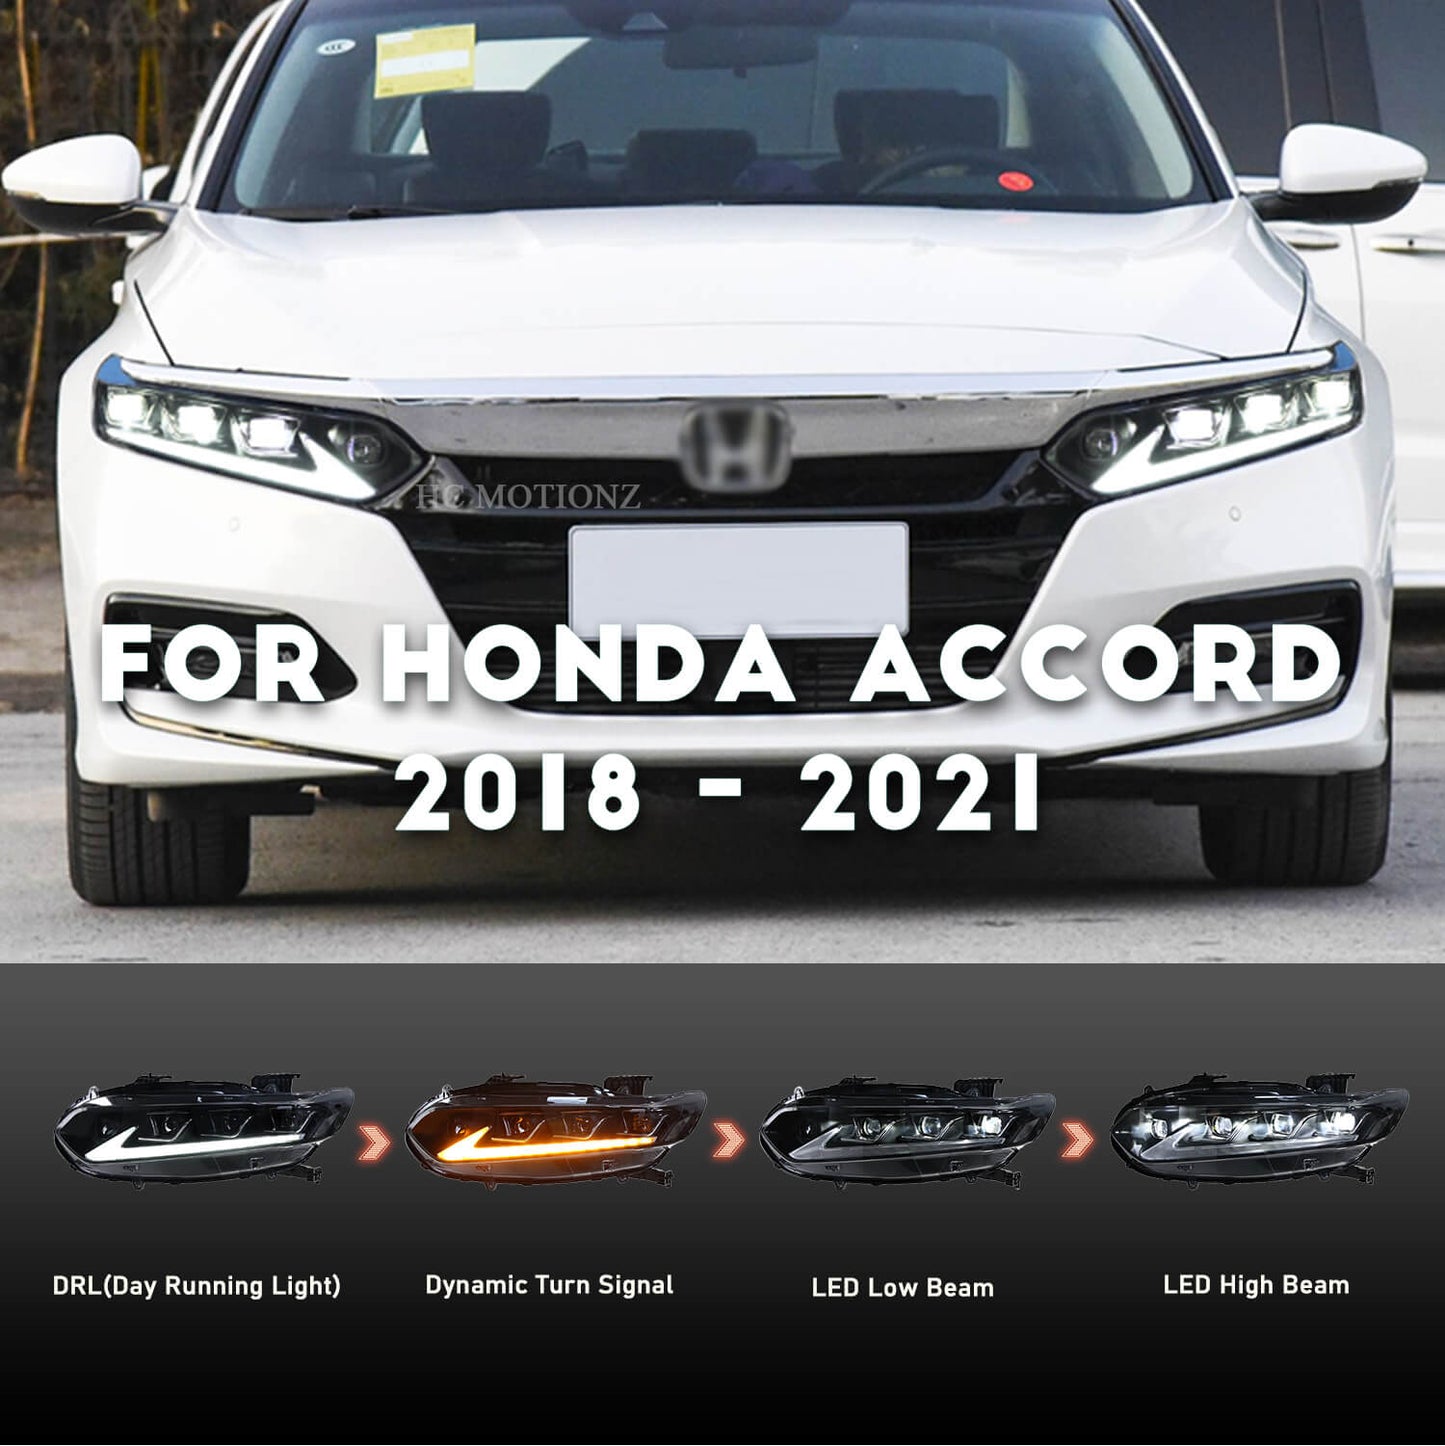 HCMOTION LED Headlights For Honda Accord 2018-2021